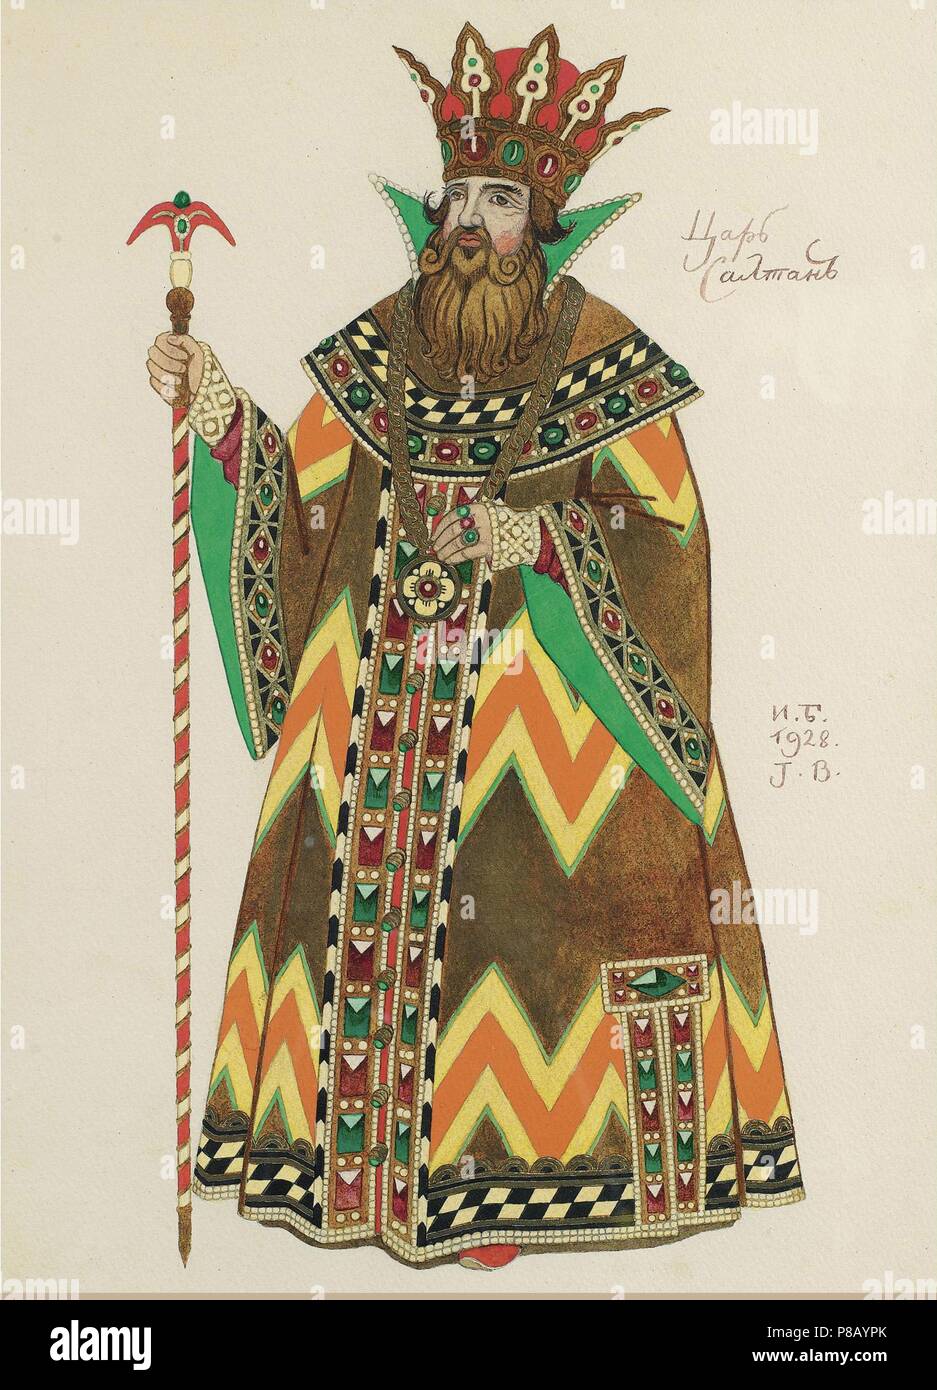 Tsar Saltan. Costume design for the opera The Tale of Tsar Saltan by N. Rimsky-Korsakov. Museum: PRIVATE COLLECTION. Stock Photo